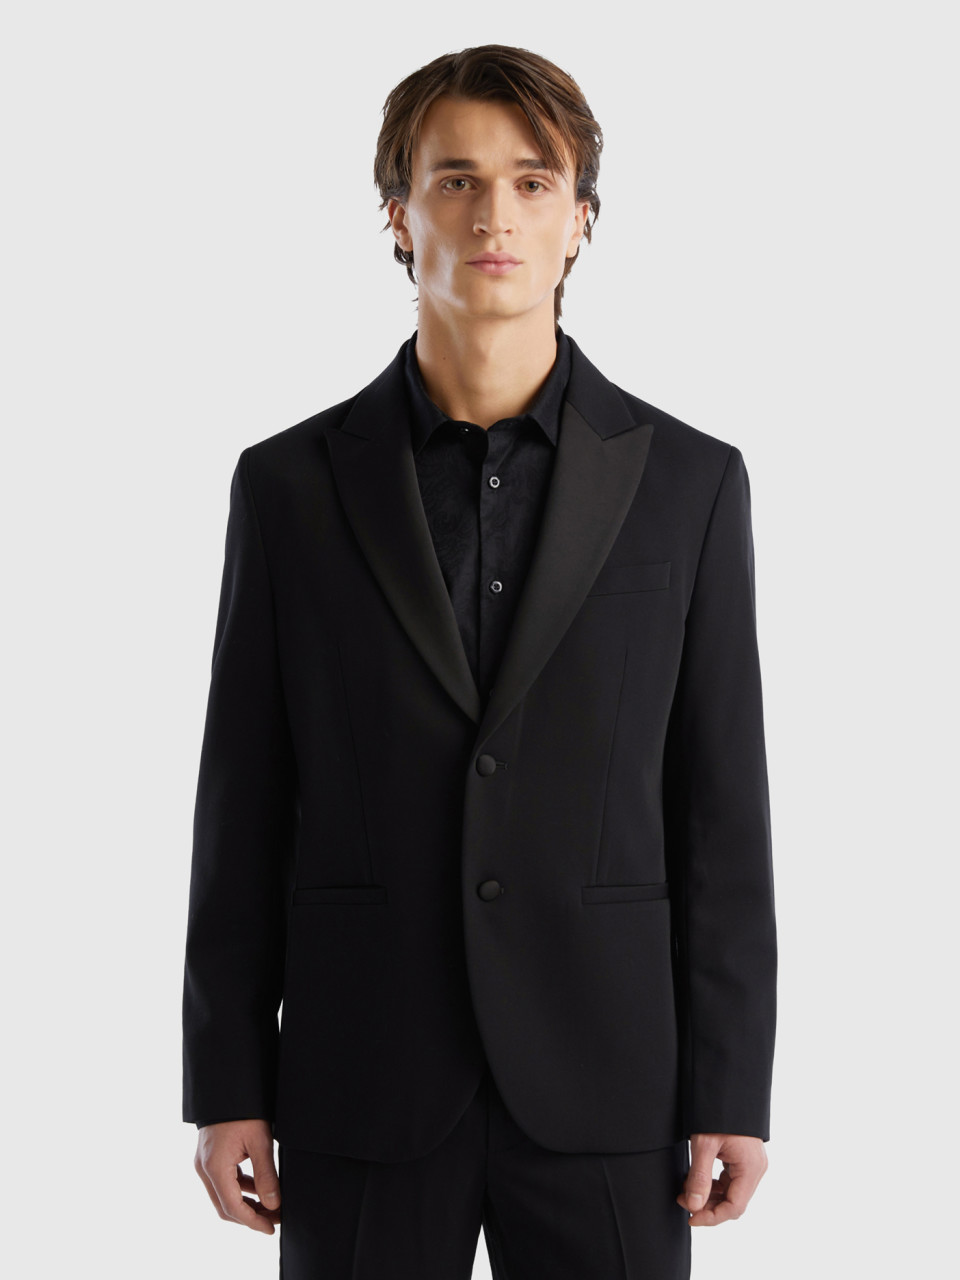 Benetton, Elegant Slim Fit Jacket, Black, Men